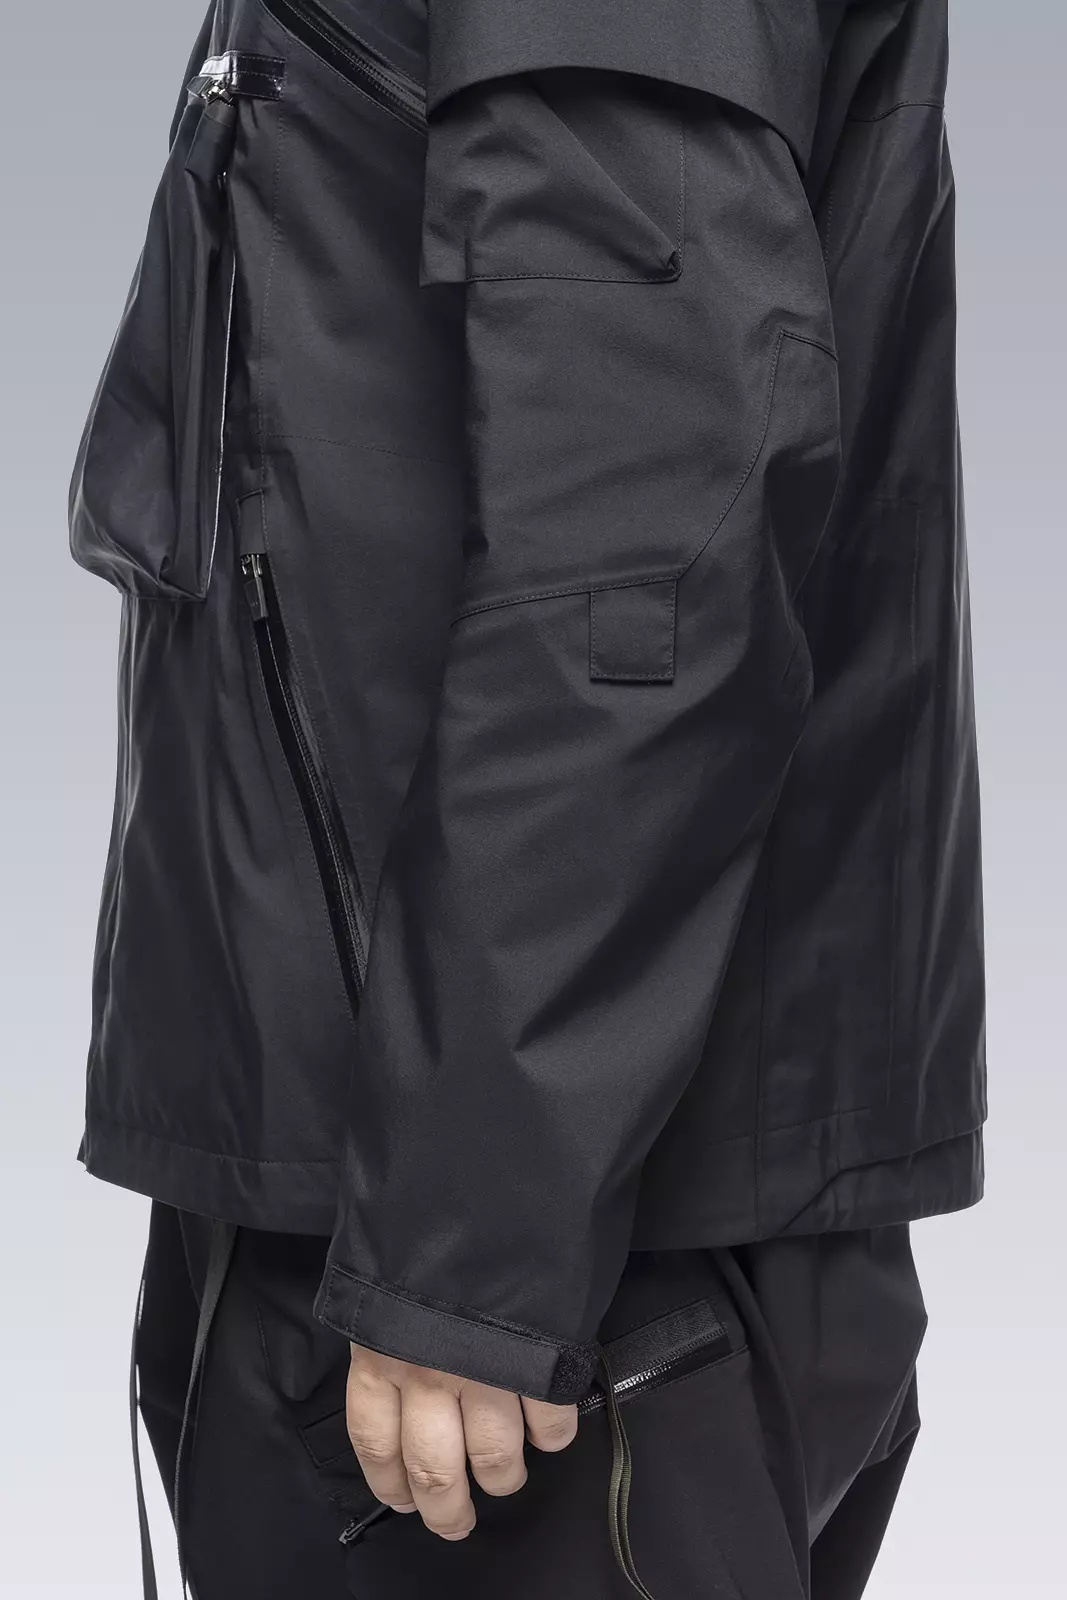 J1A-GTKR-BKS KR EX 3L Gore-Tex® Pro Interops Jacket Black with size 5 WR zippers in gloss black - 31